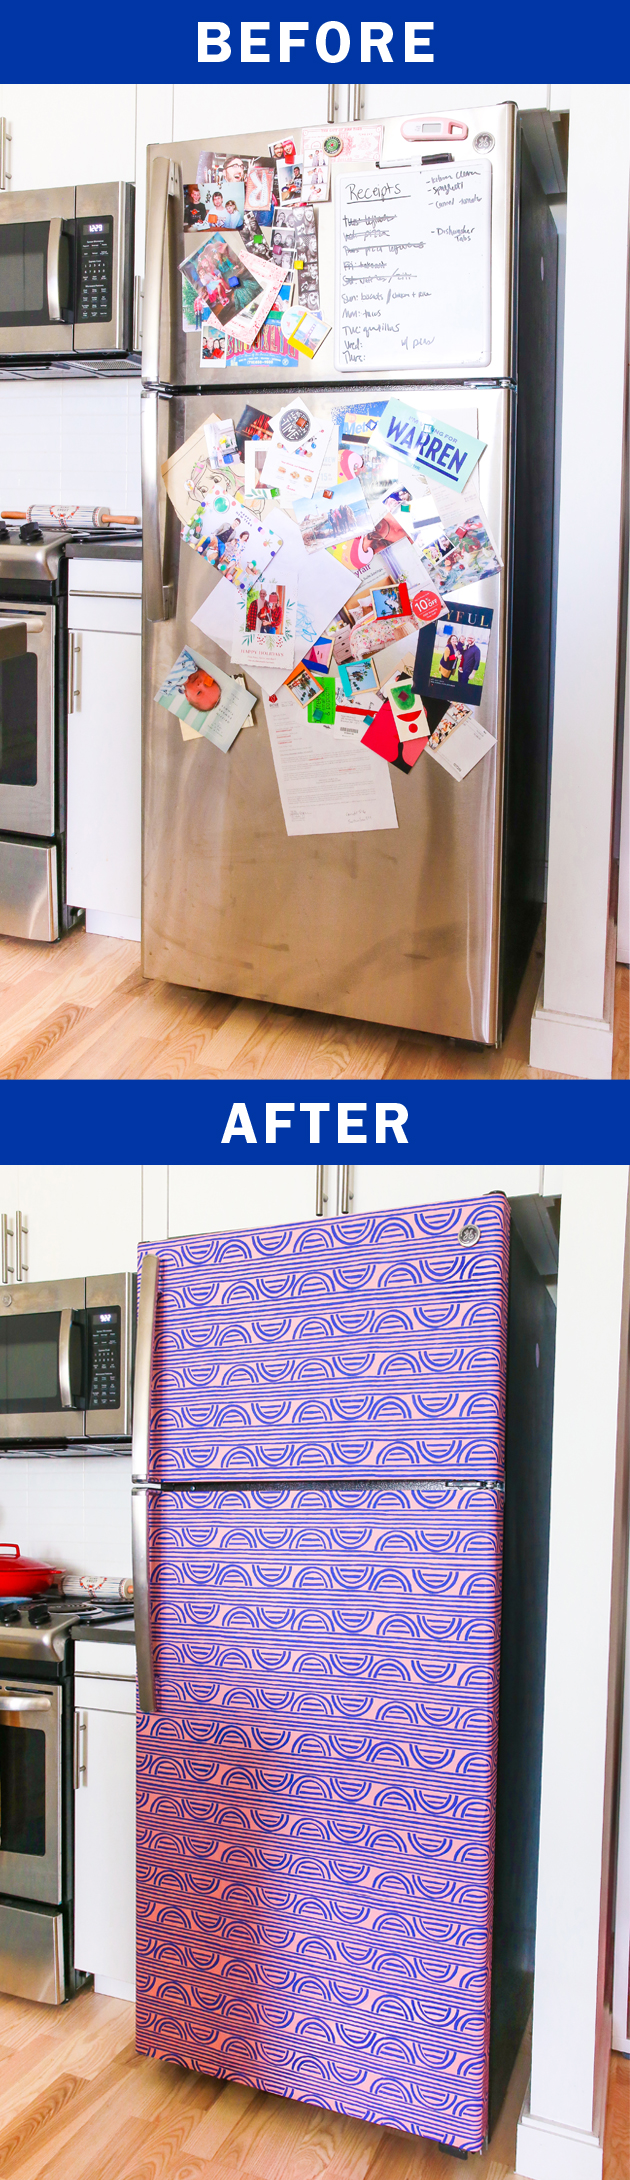 How To wallpaper your fridge